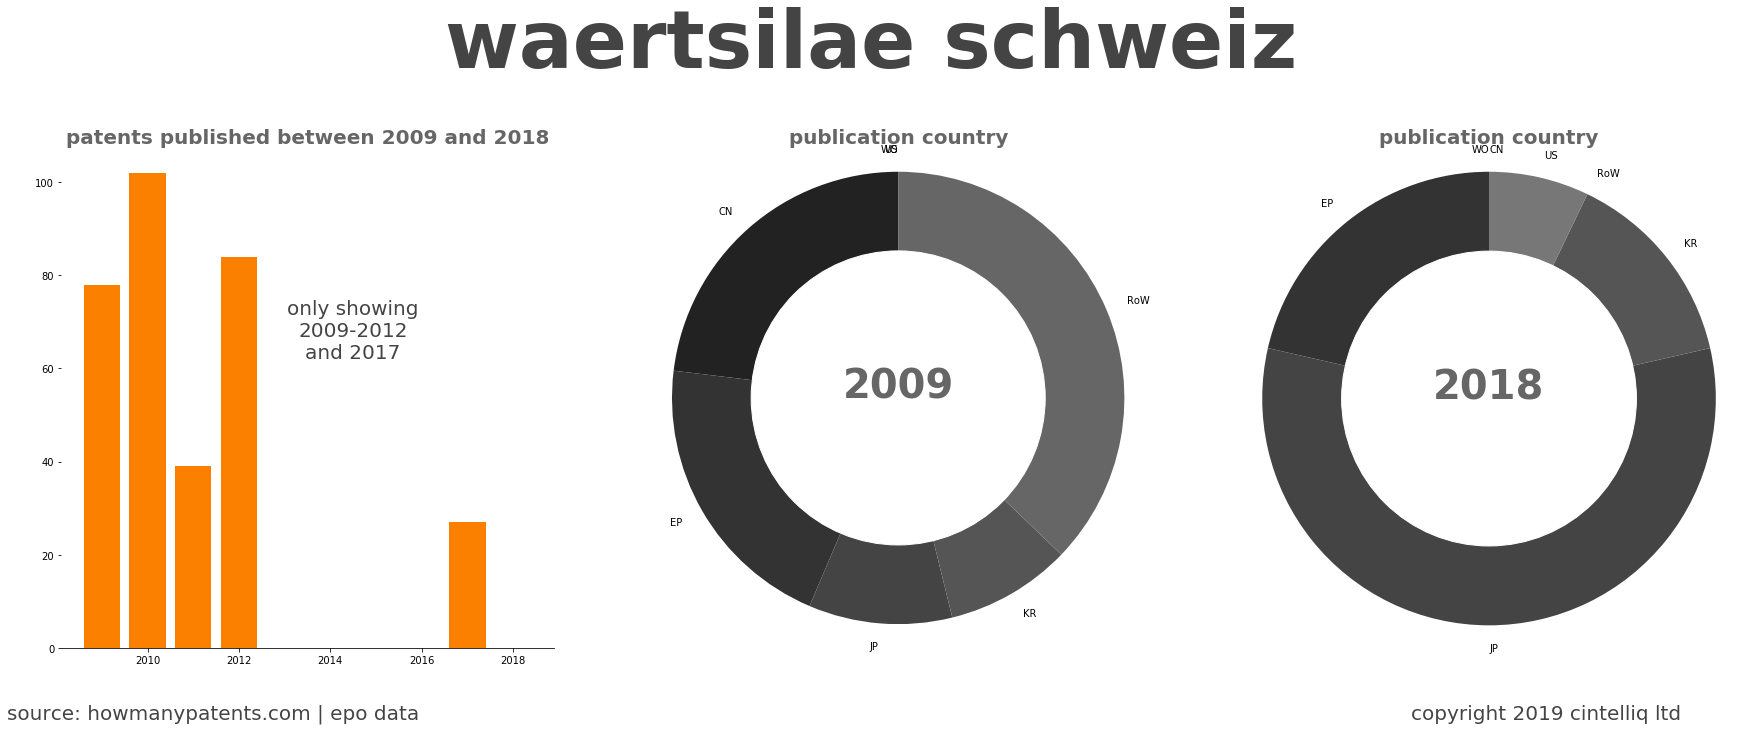 summary of patents for Waertsilae Schweiz